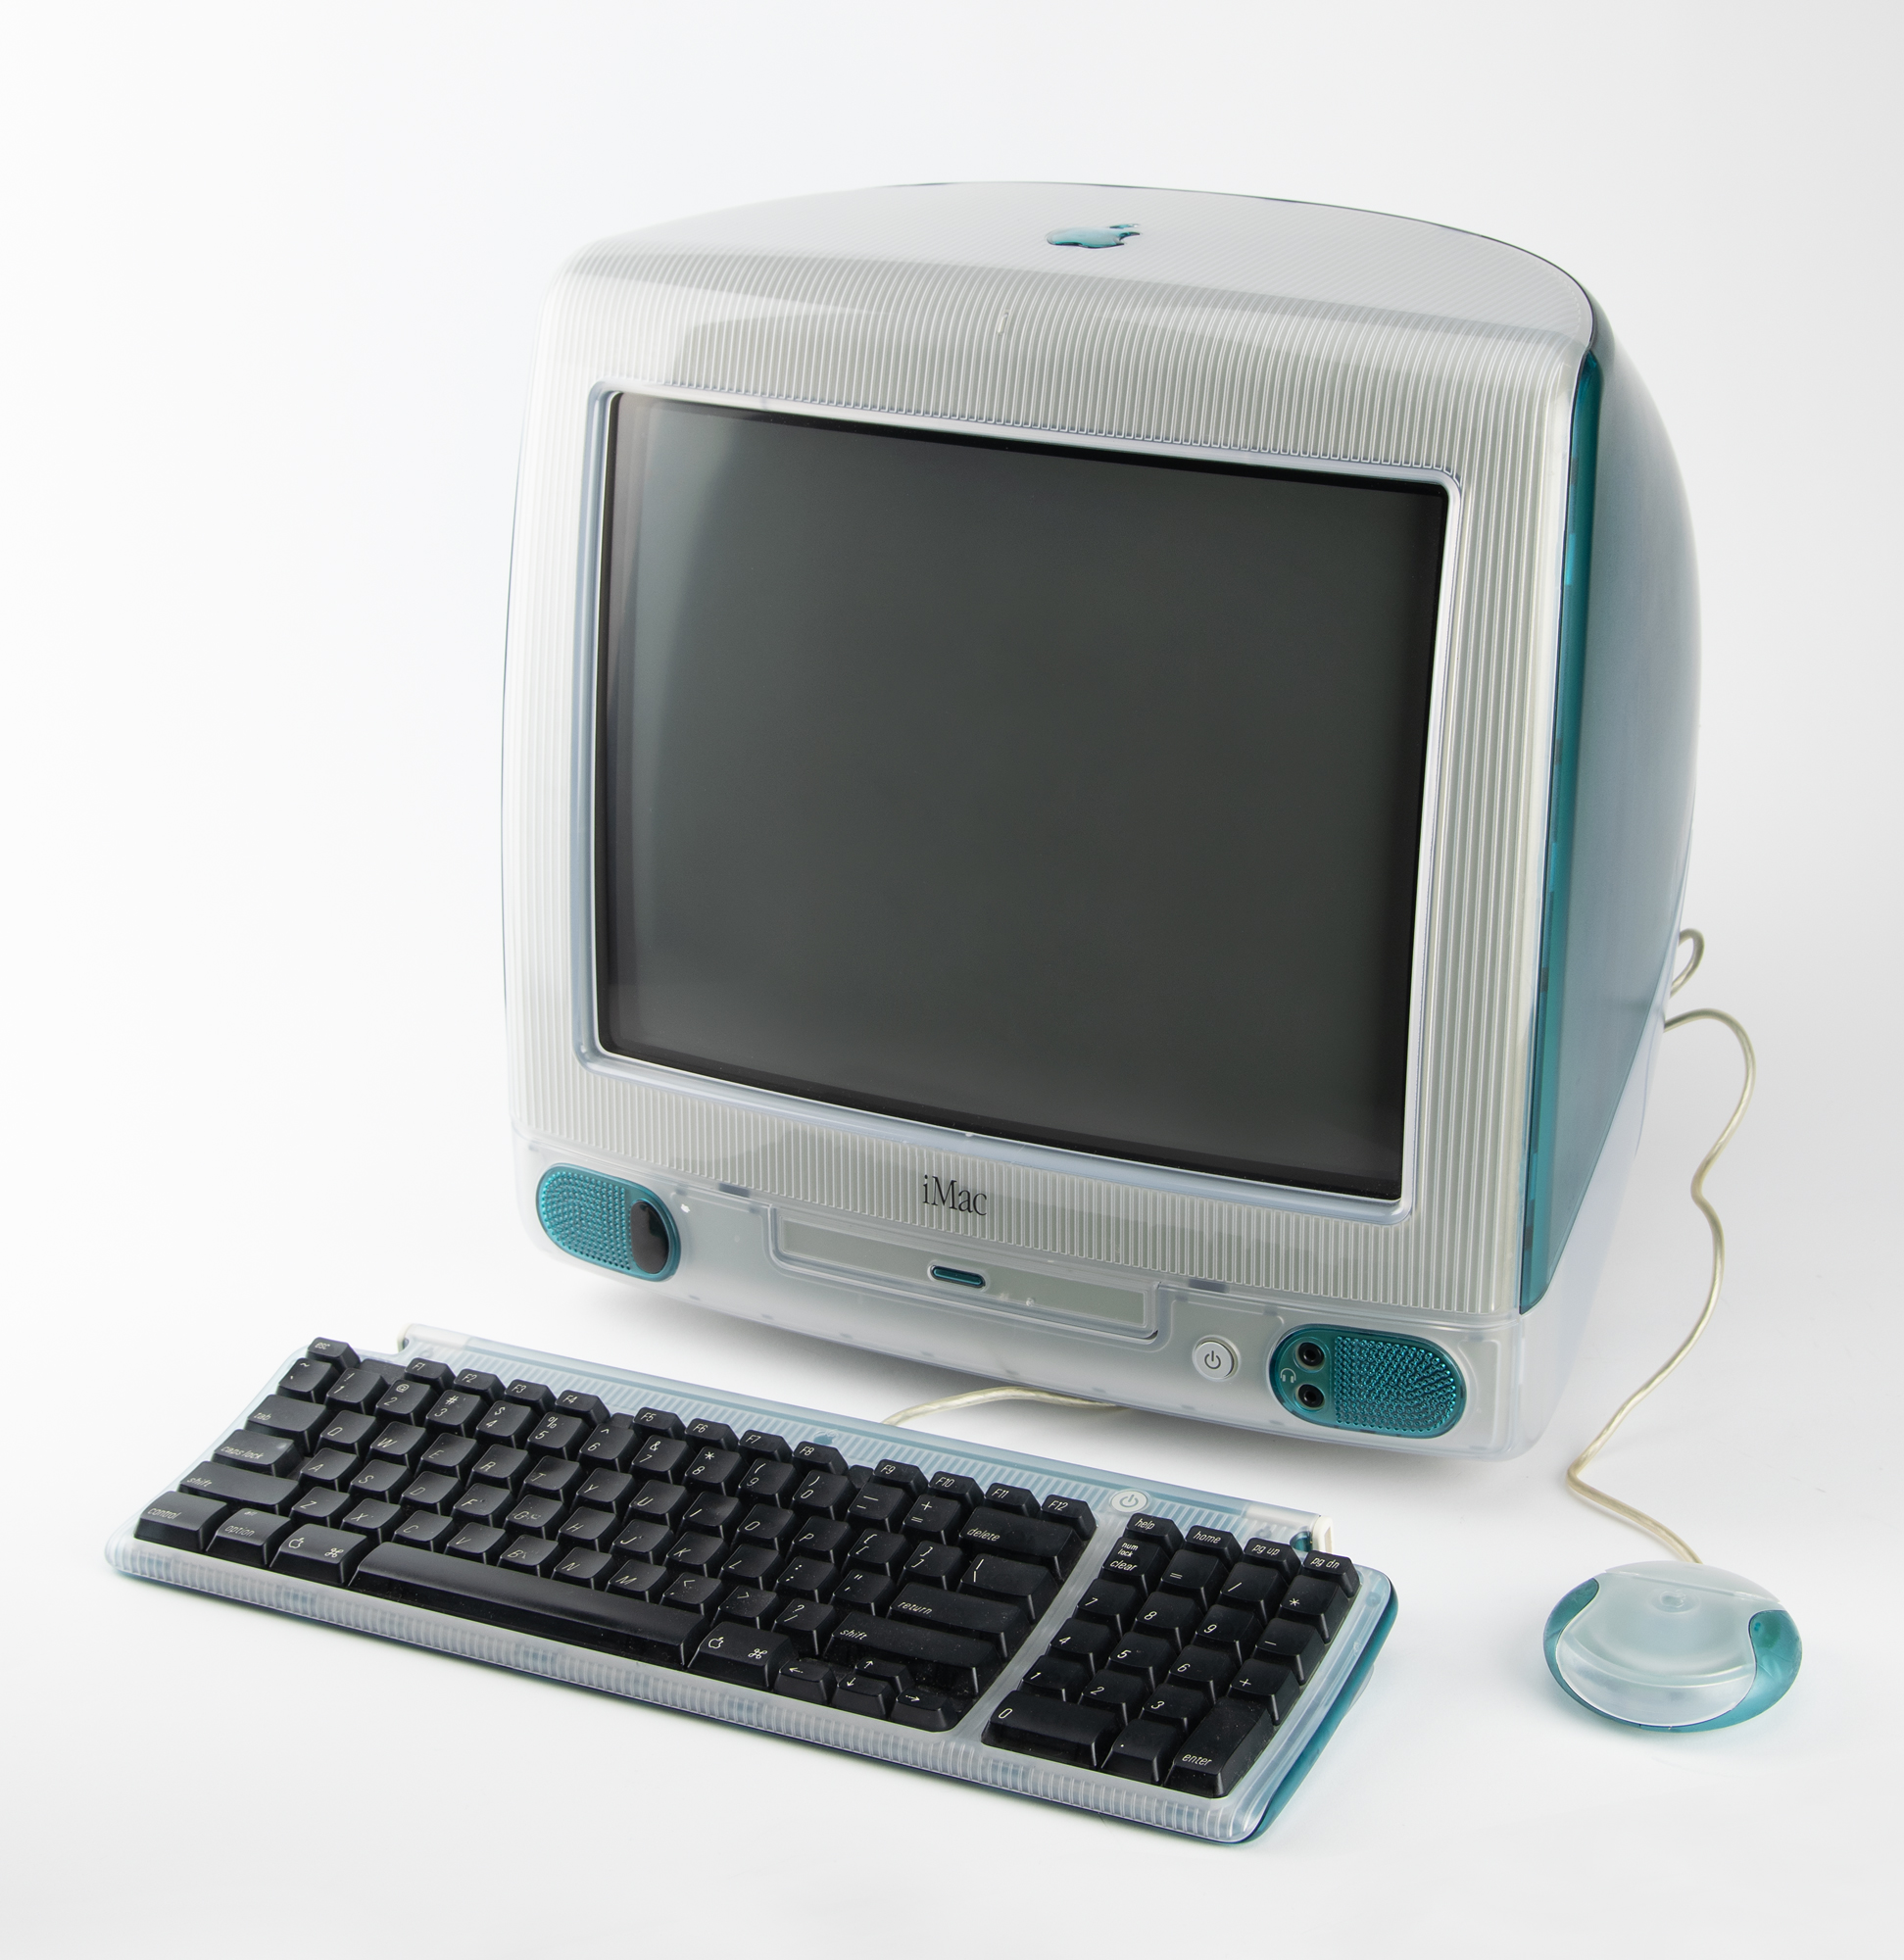 Personal Computer - Apple iMac, Bondi Blue, 1998